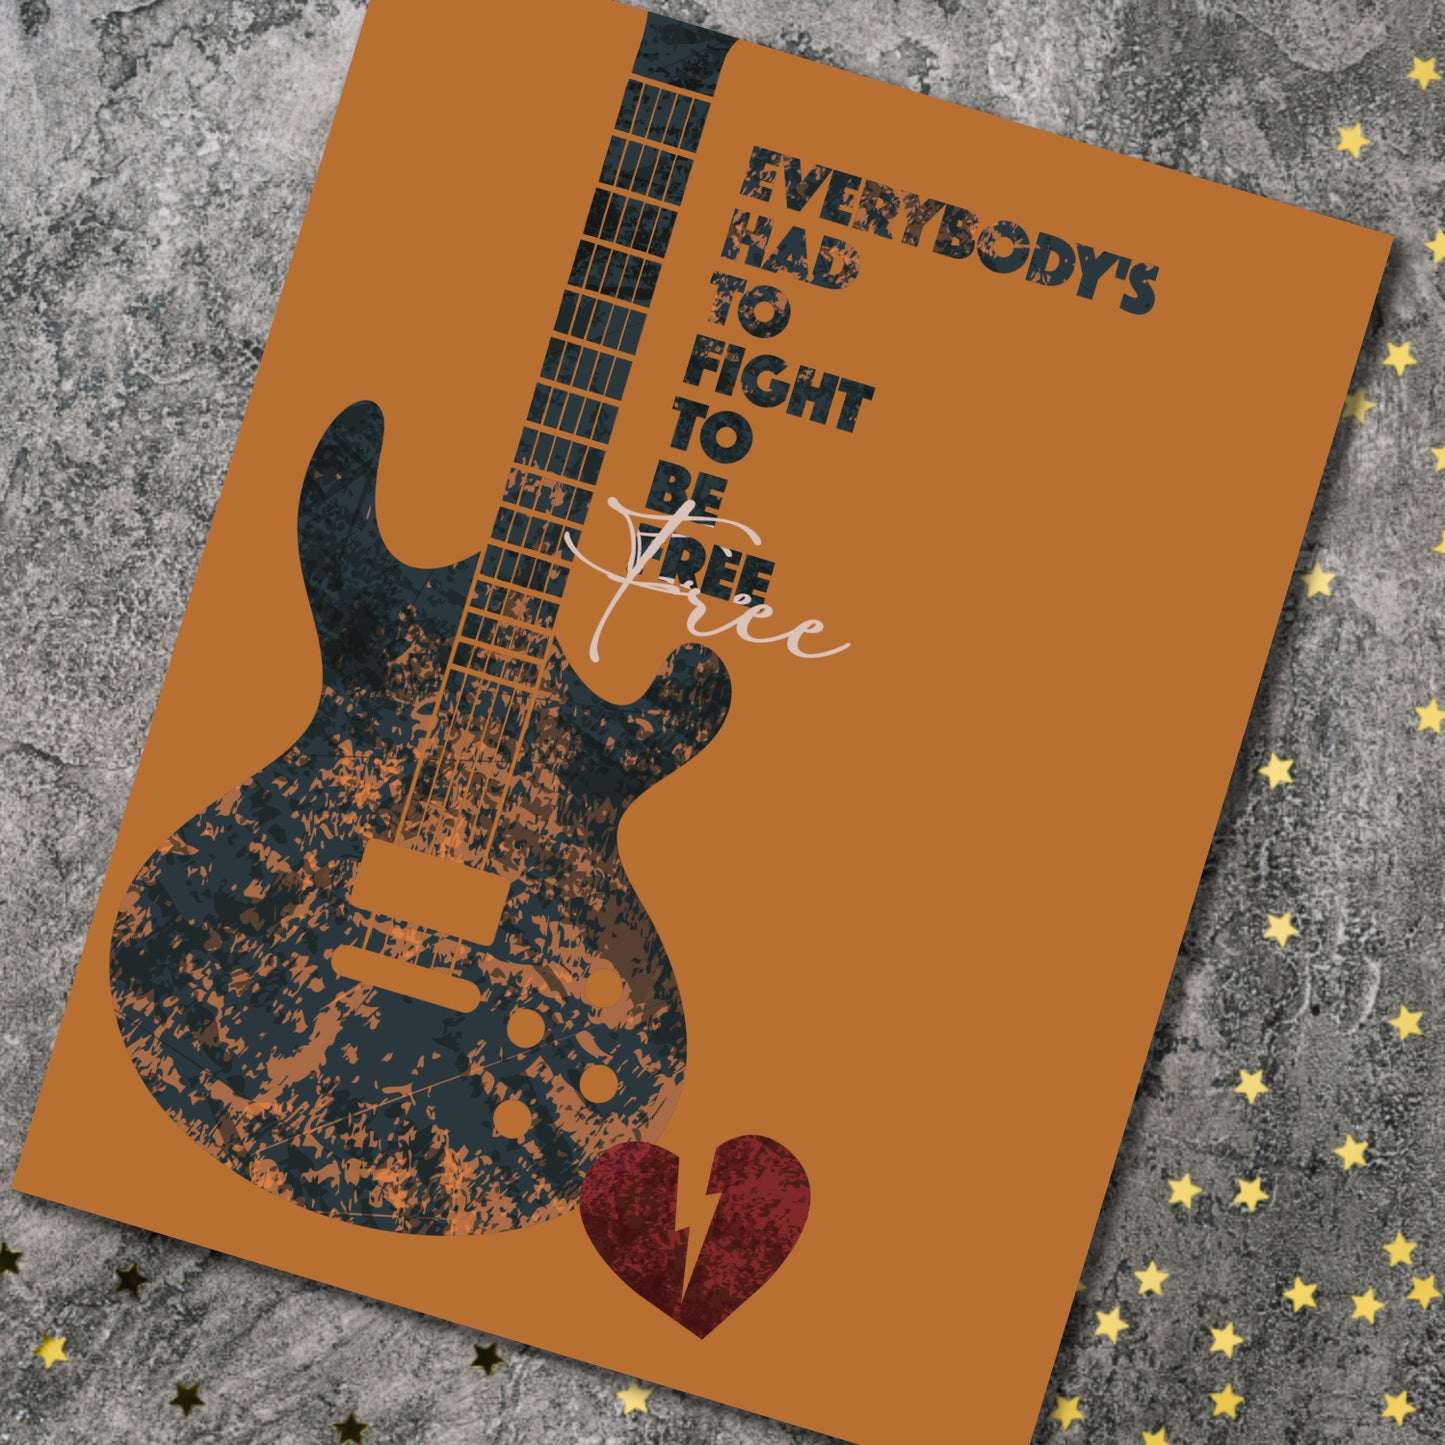 Refugee by Tom Petty - Rock Music Lyrical Poster Wall Art Print